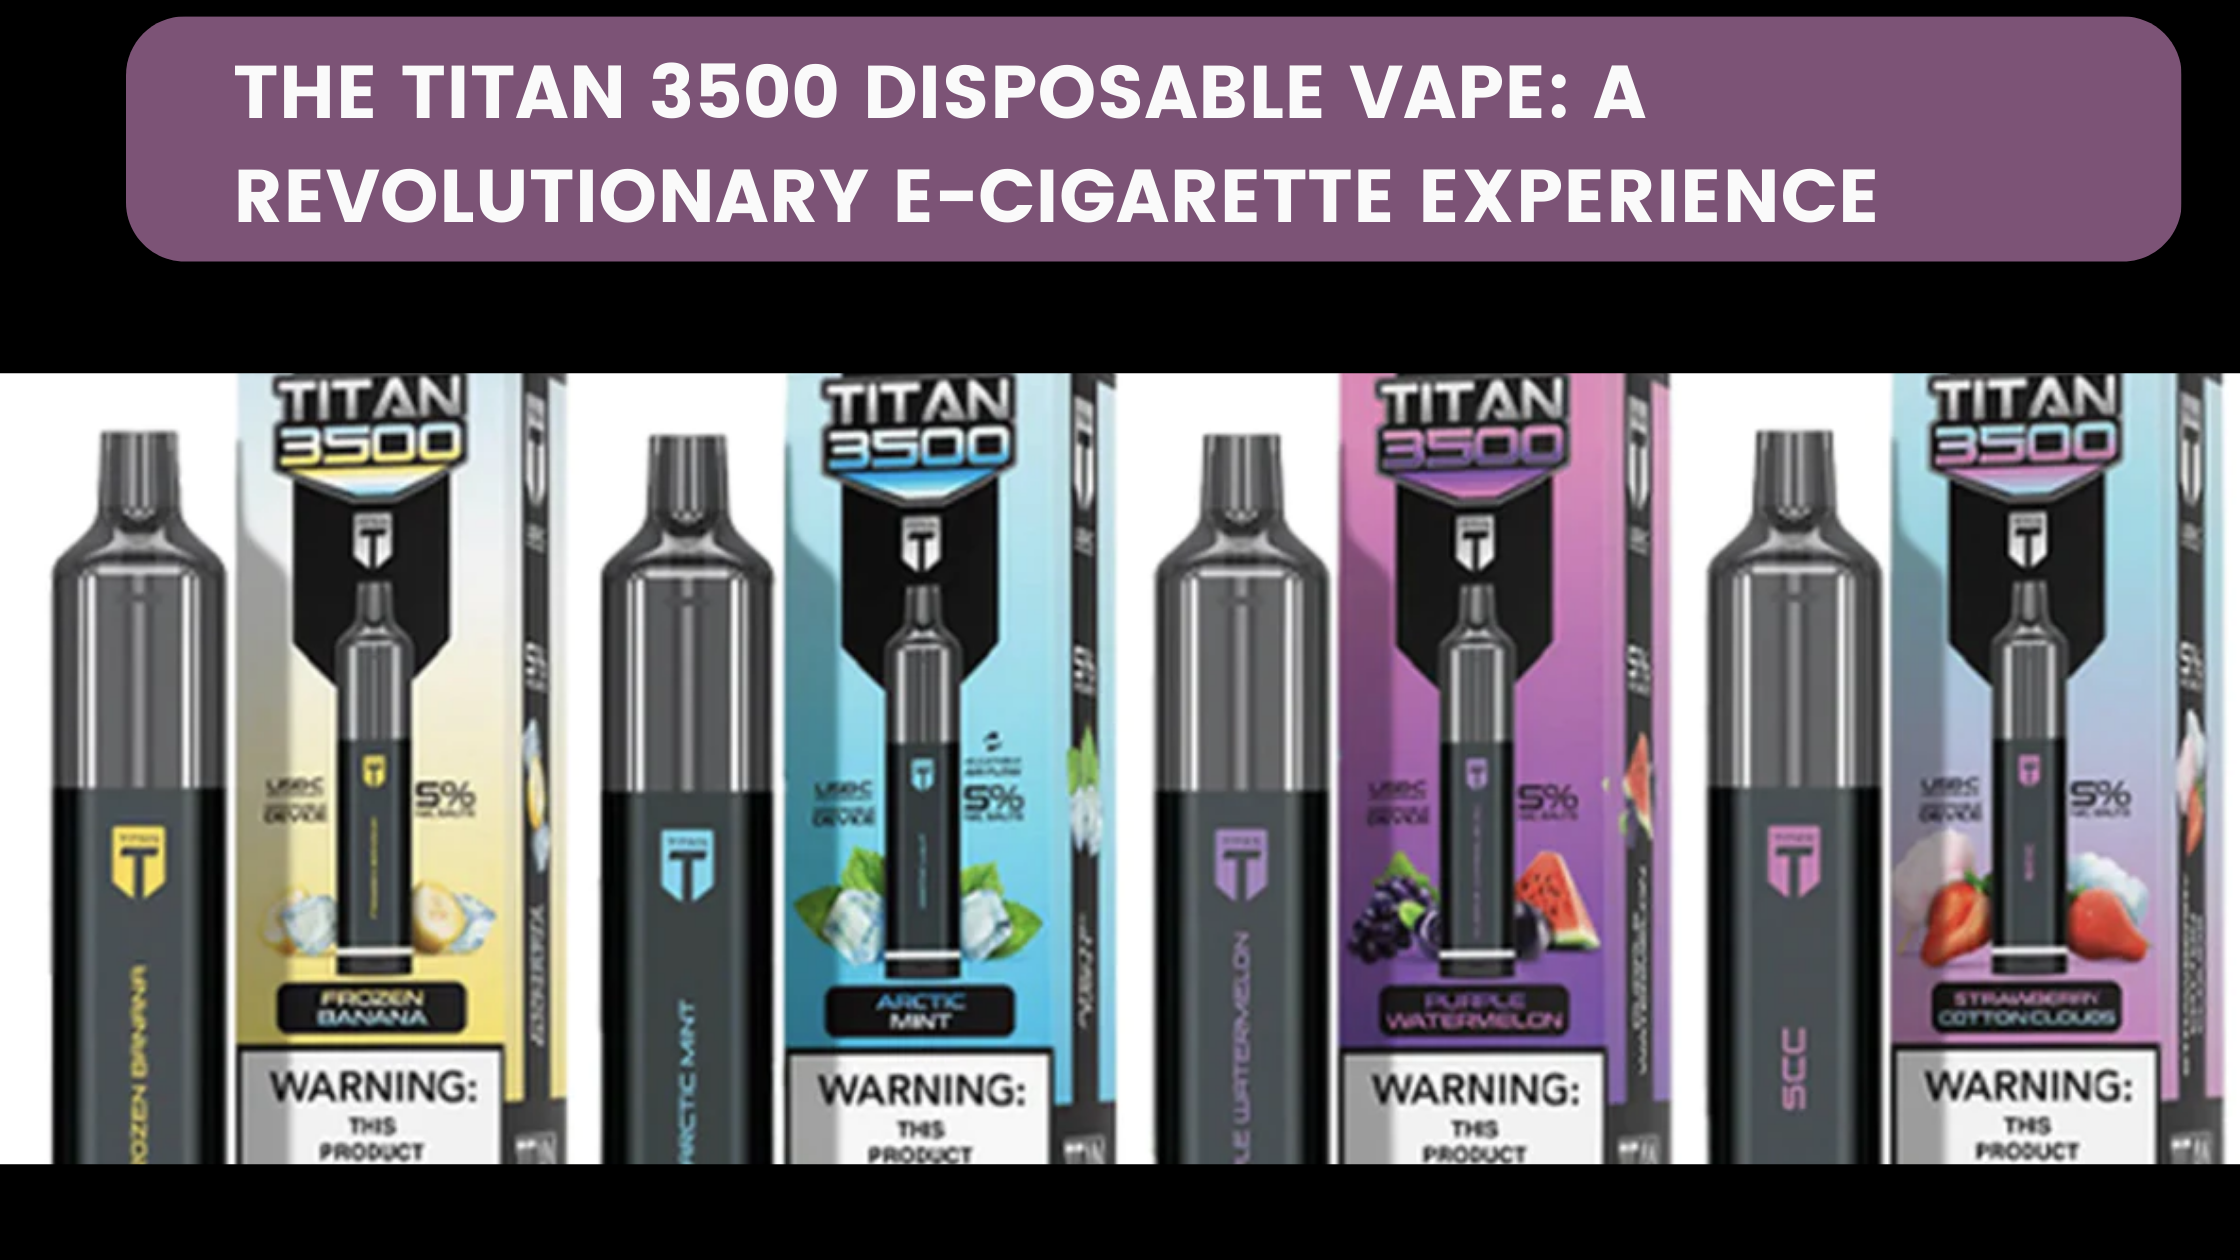 The Titan 3500 Disposable Vape: A Revolutionary E-Cigarette Experience